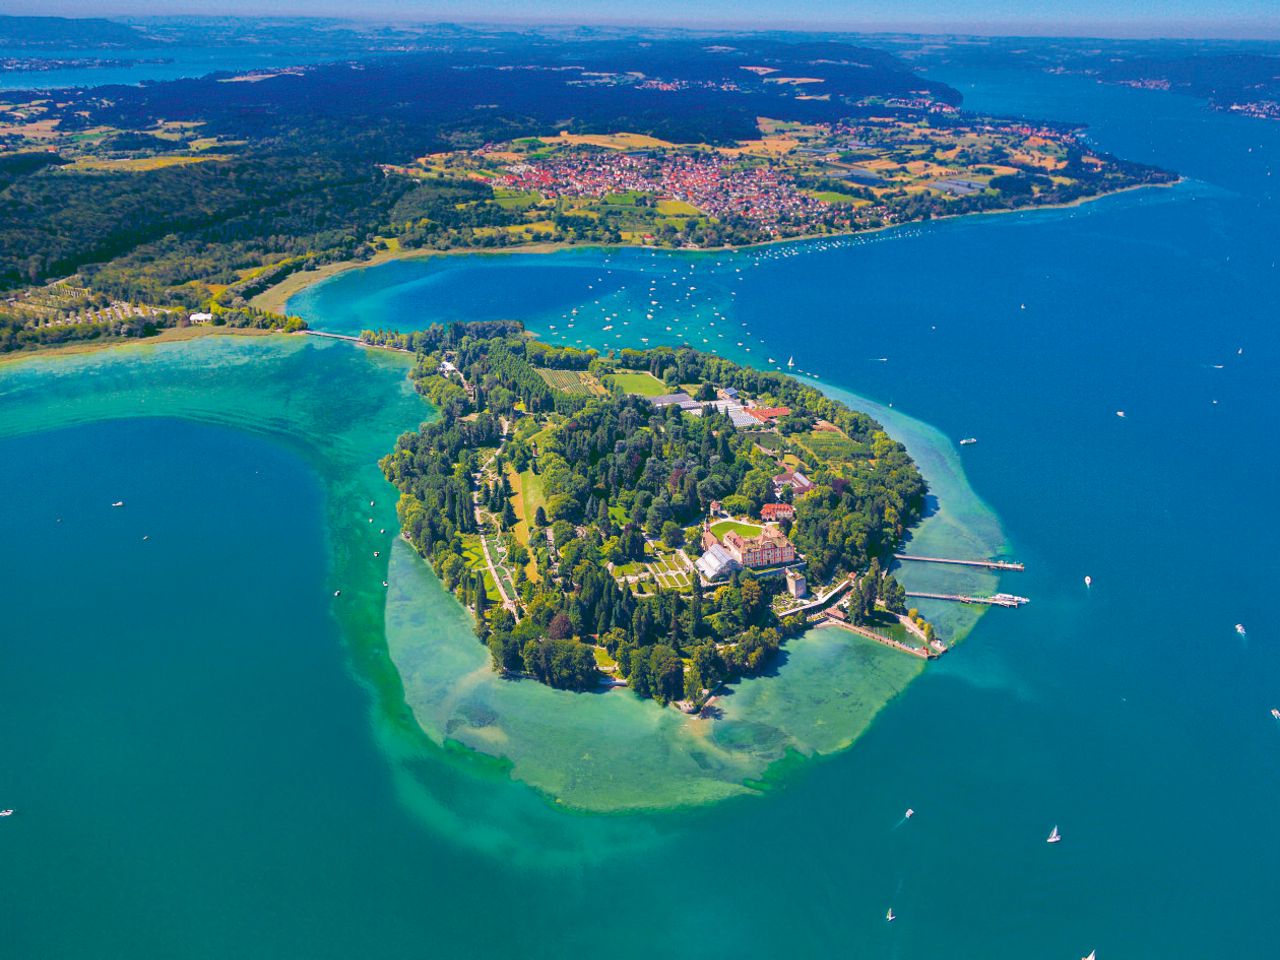 Blumige Farbenpracht-Insel Mainau im Bodensee | 7 T.